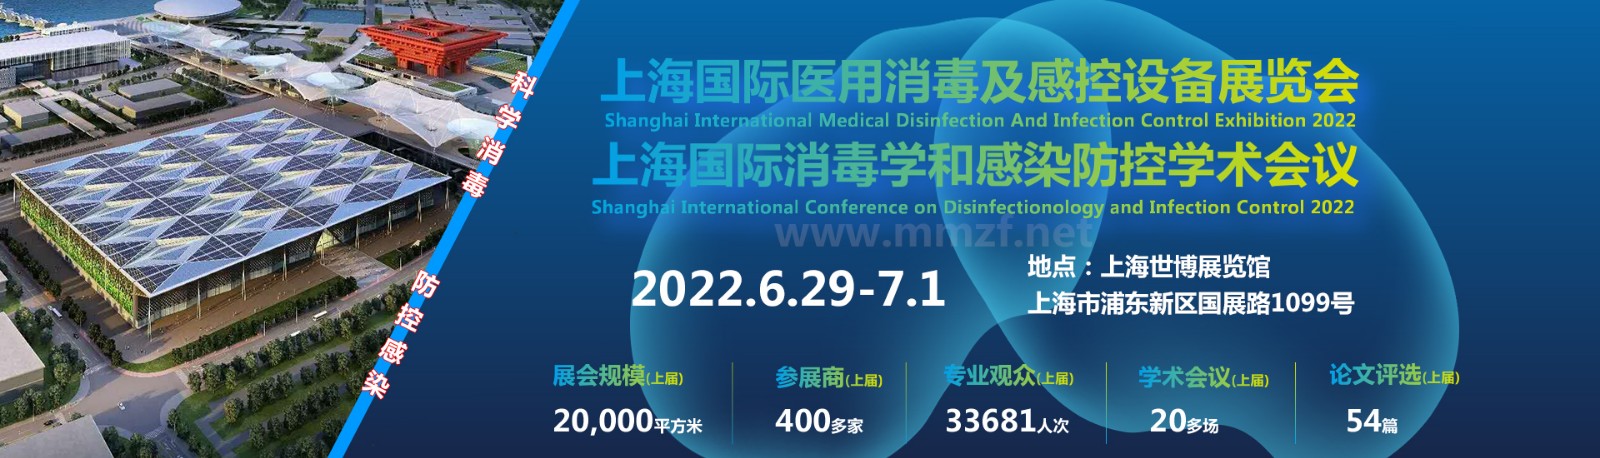 MDIC2022上海国际医用消毒及感控设备展览会-展会介绍